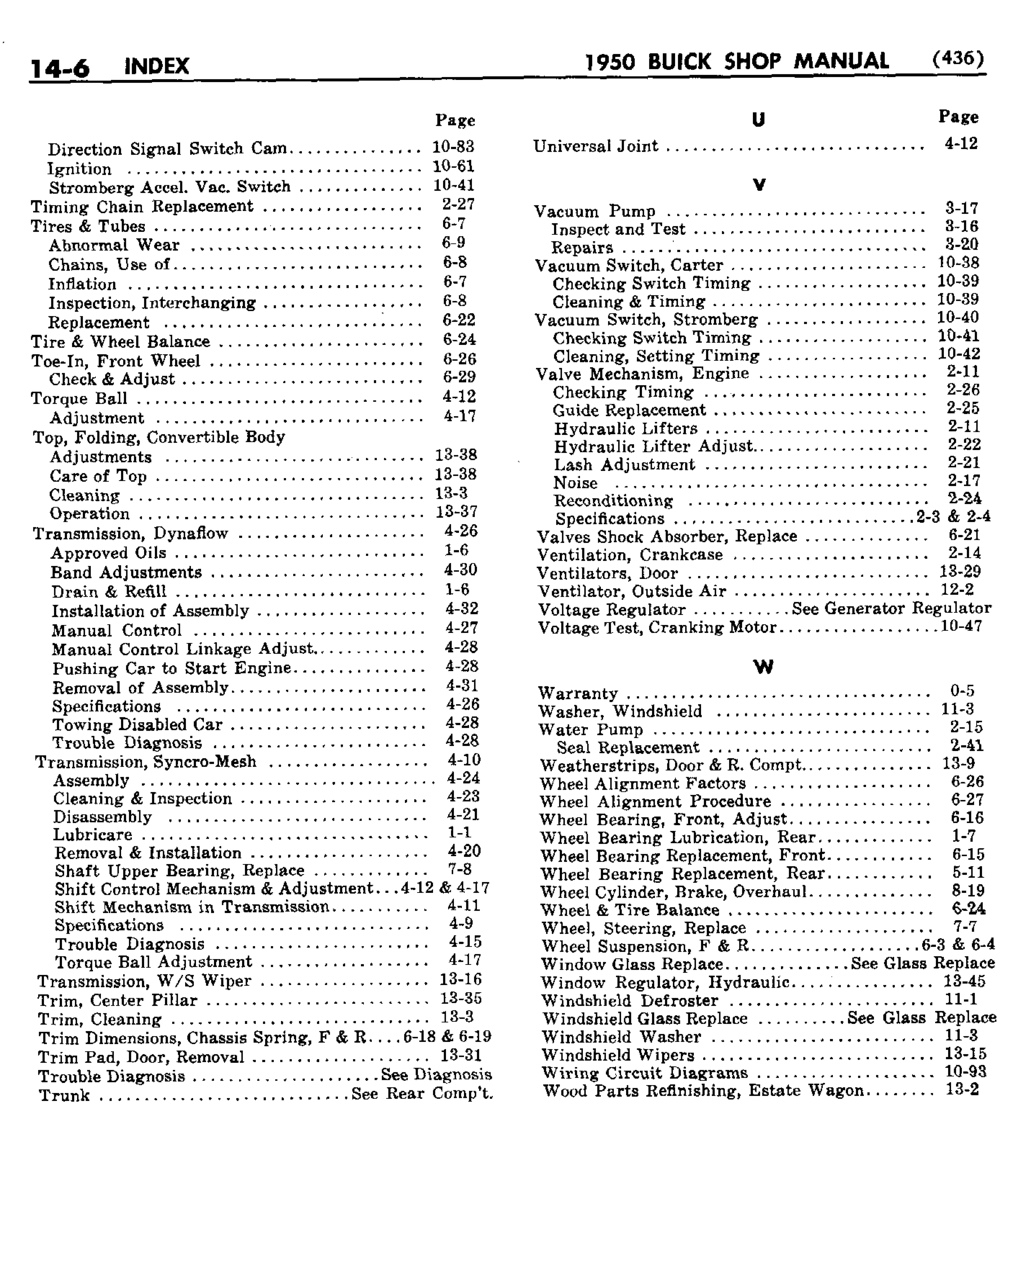 n_15 1950 Buick Shop Manual - Index-006-006.jpg